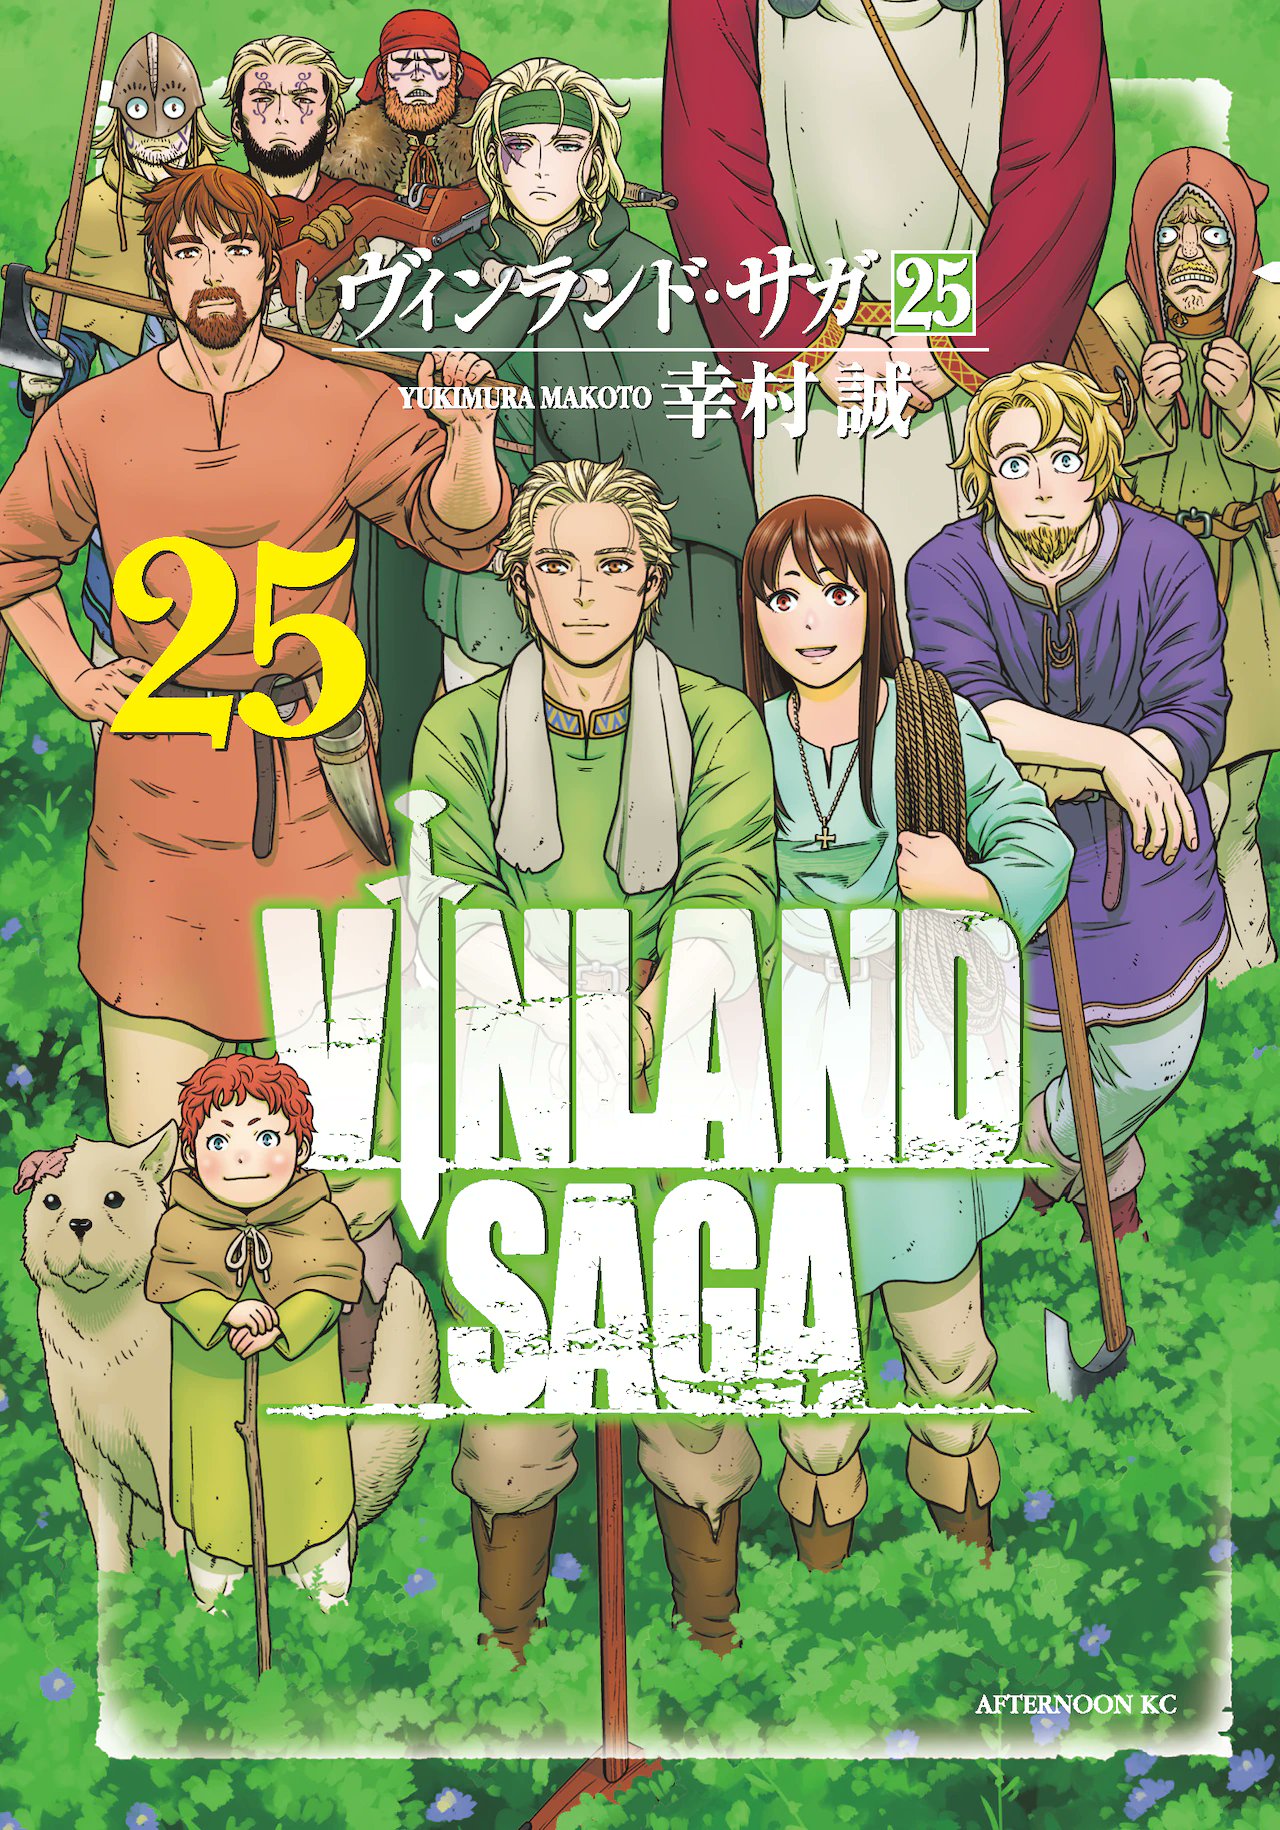 Vinland Saga Vol. 7